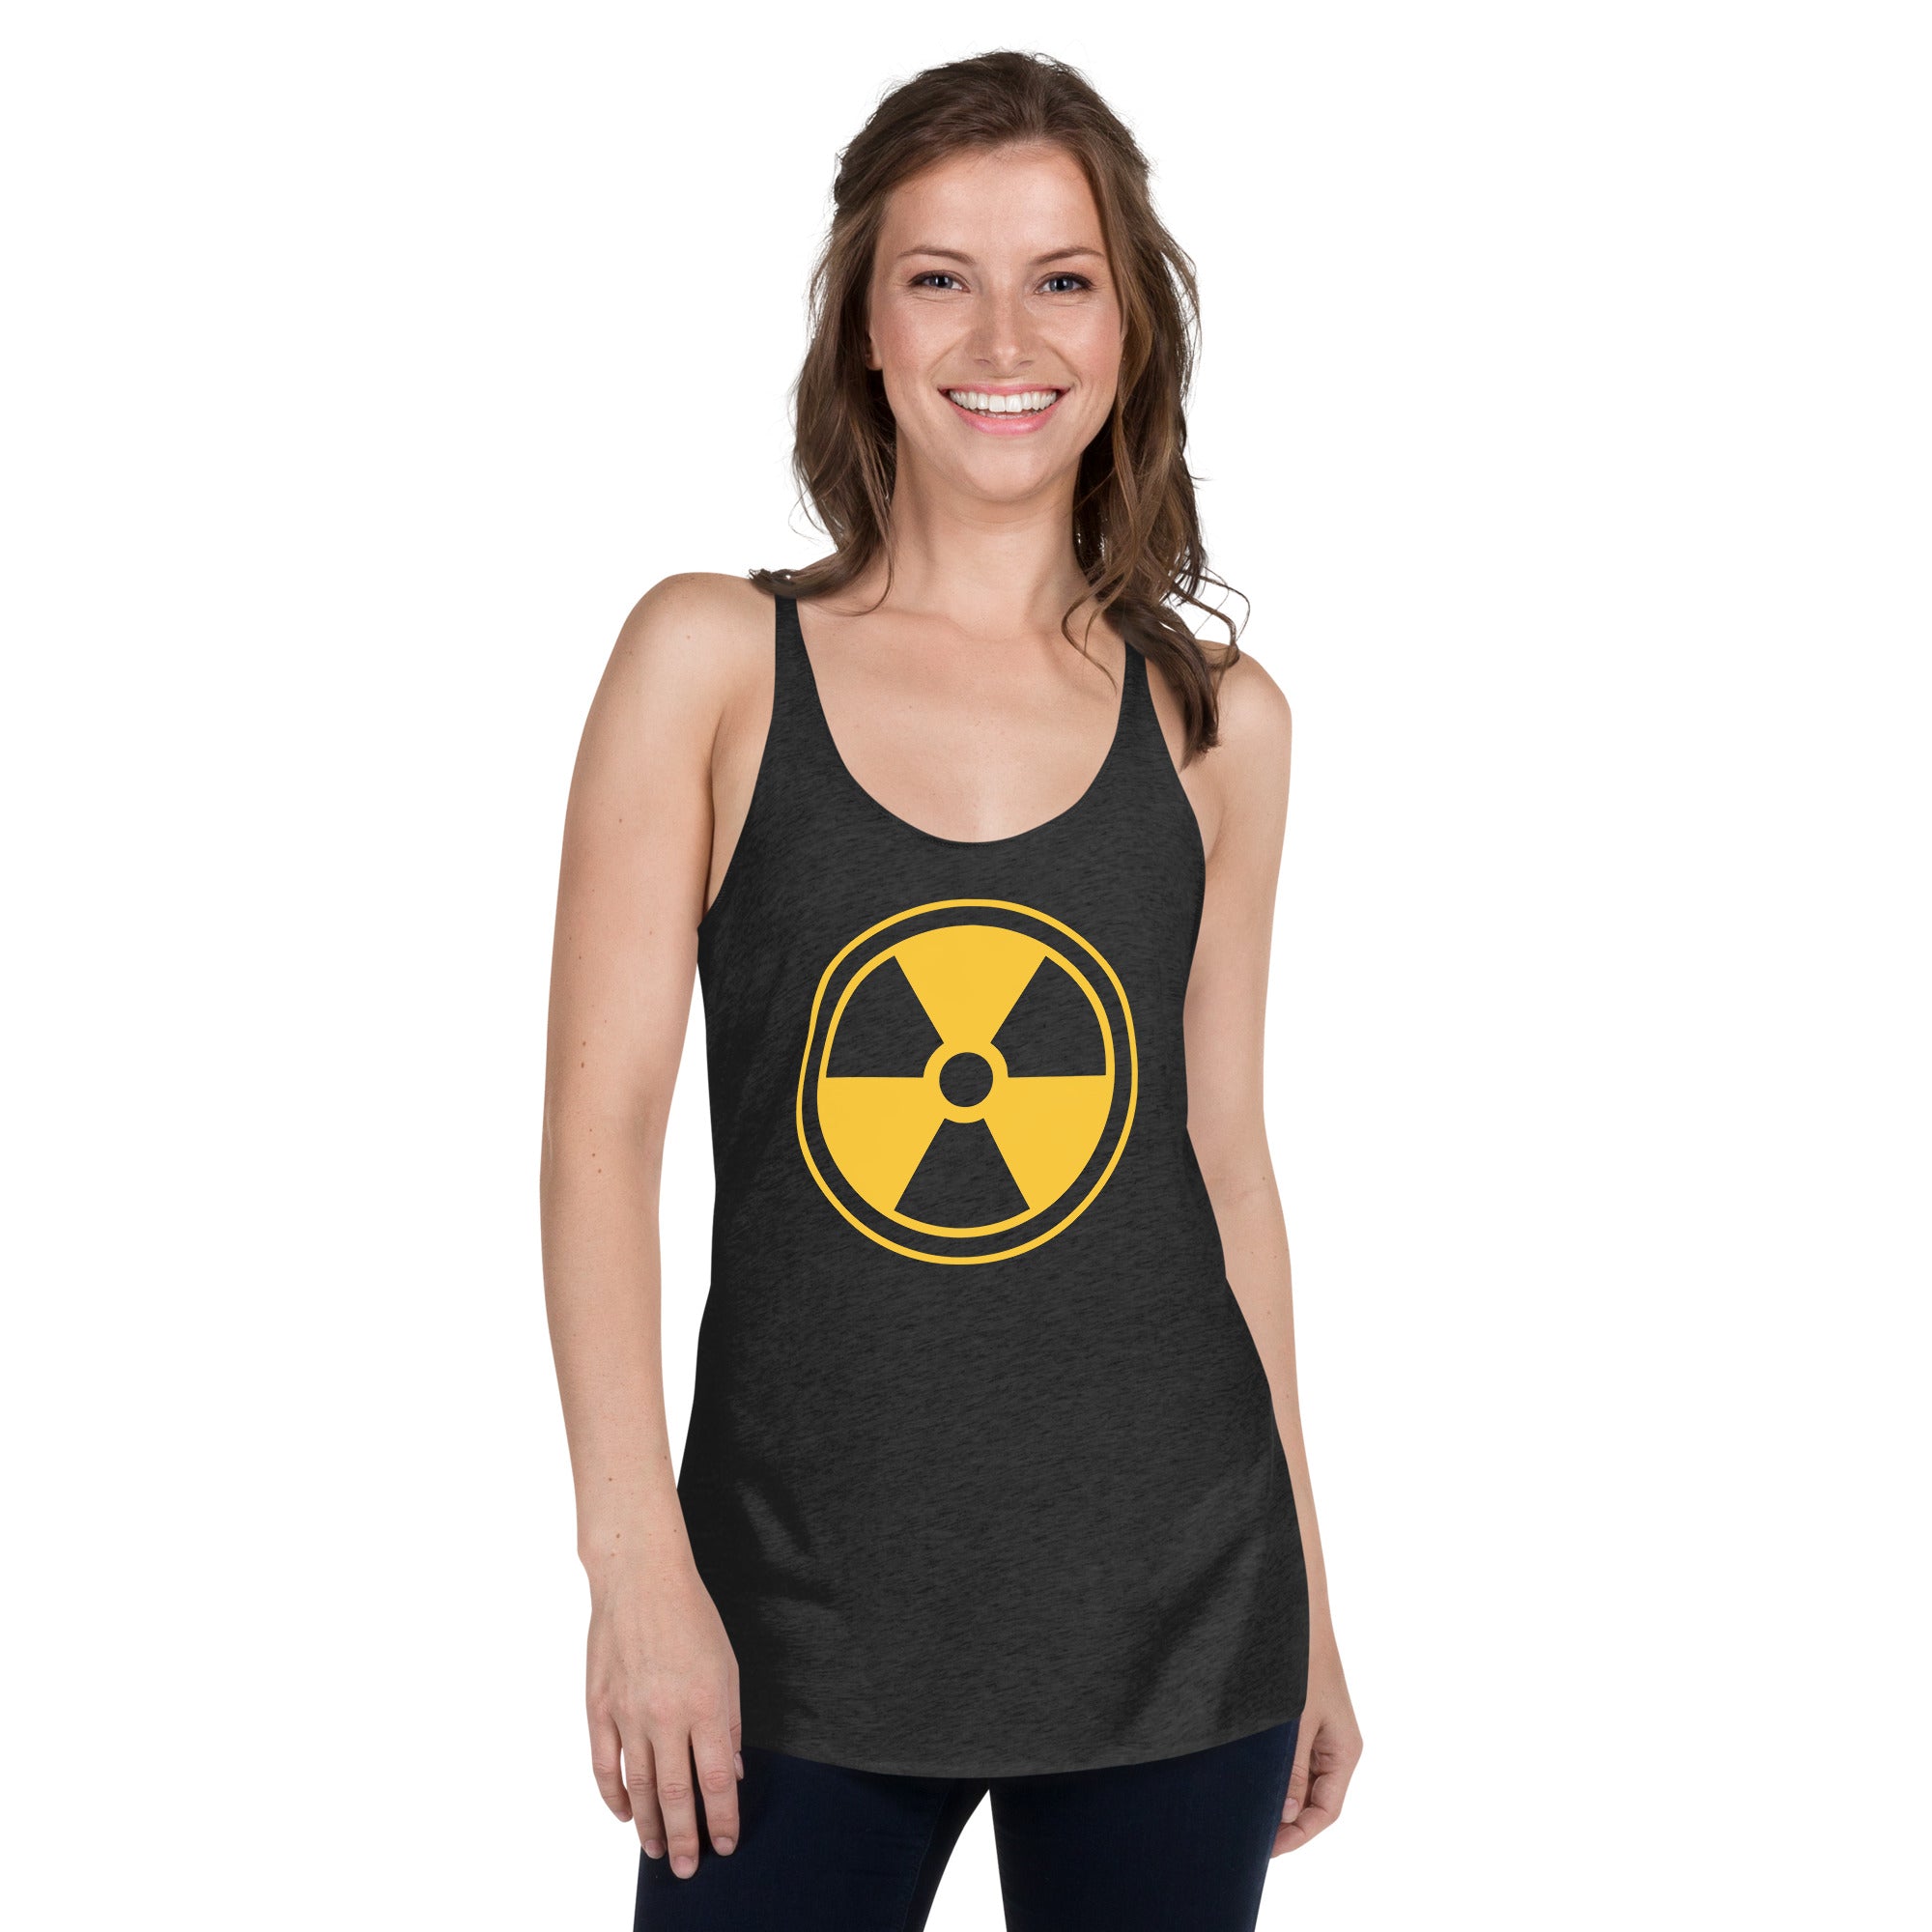 Yellow Radioactive Radiation Warning Sign Women's Racerback Tank Top Shirt